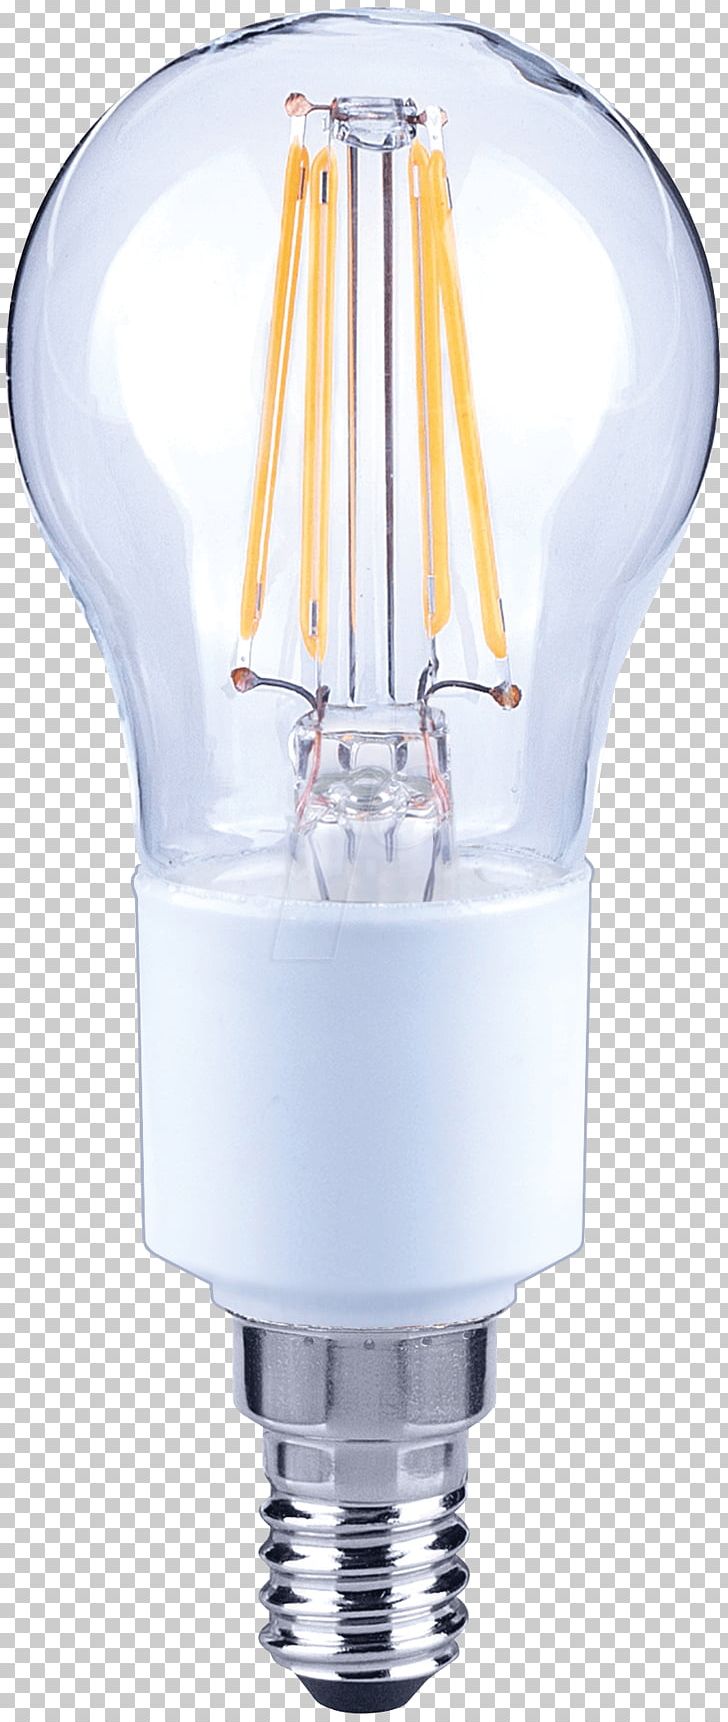 Incandescent Light Bulb LED Lamp LED Filament PNG, Clipart, Drop, Edison Screw, Eec, Electrical Filament, Electric Light Free PNG Download